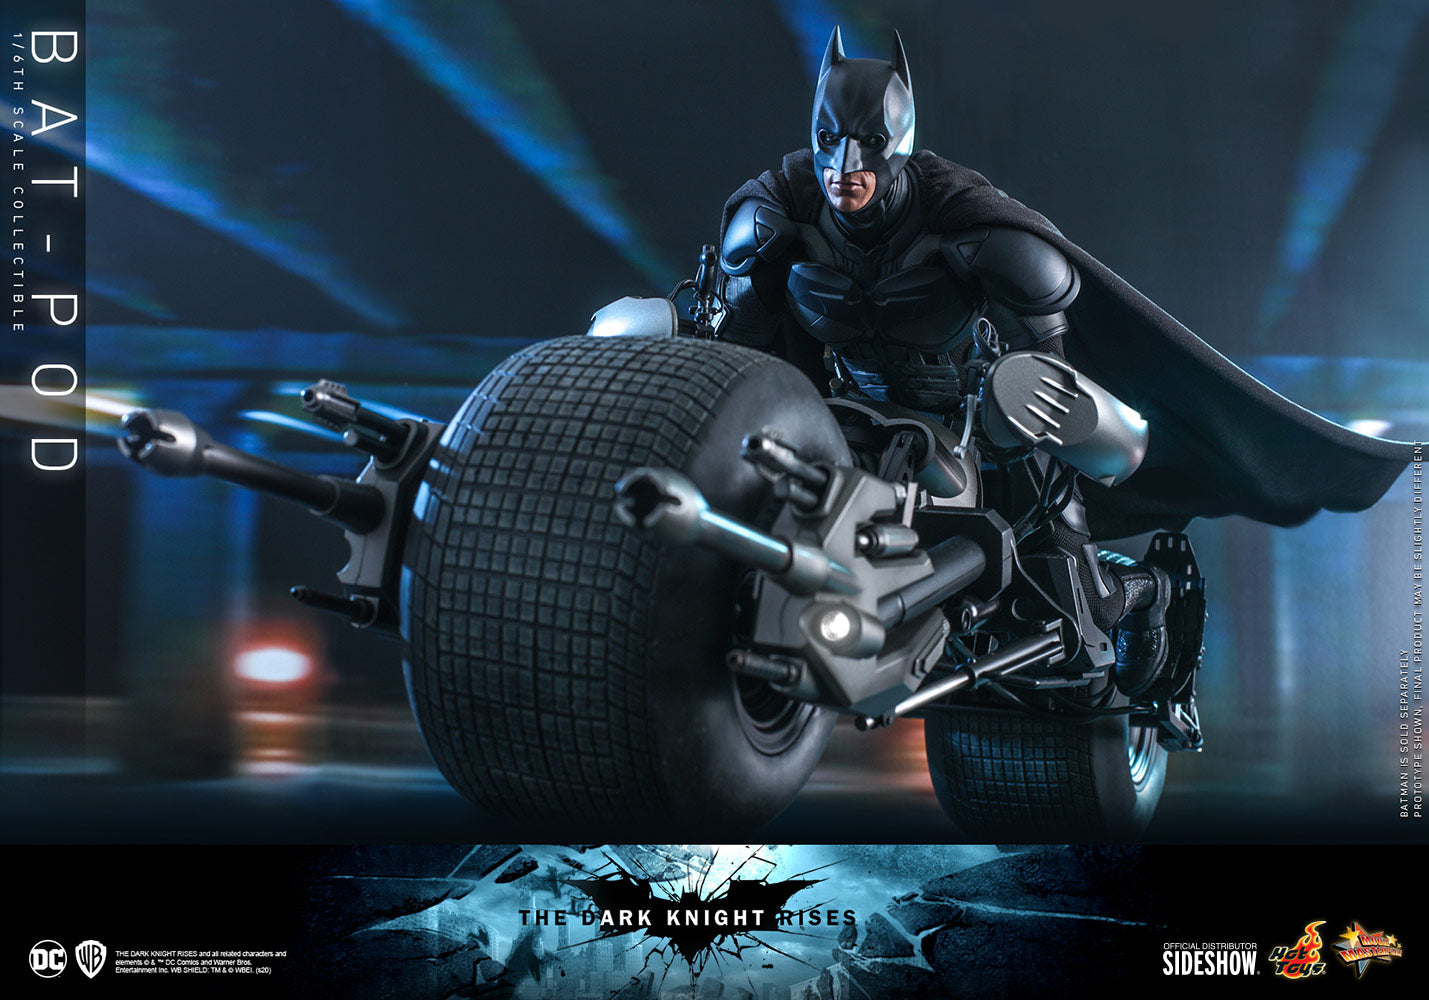 Pedido Vehículo Bat-Pod 2.0 - The Dark Knight Rises marca Hot Toys MMS591 escala 1/6